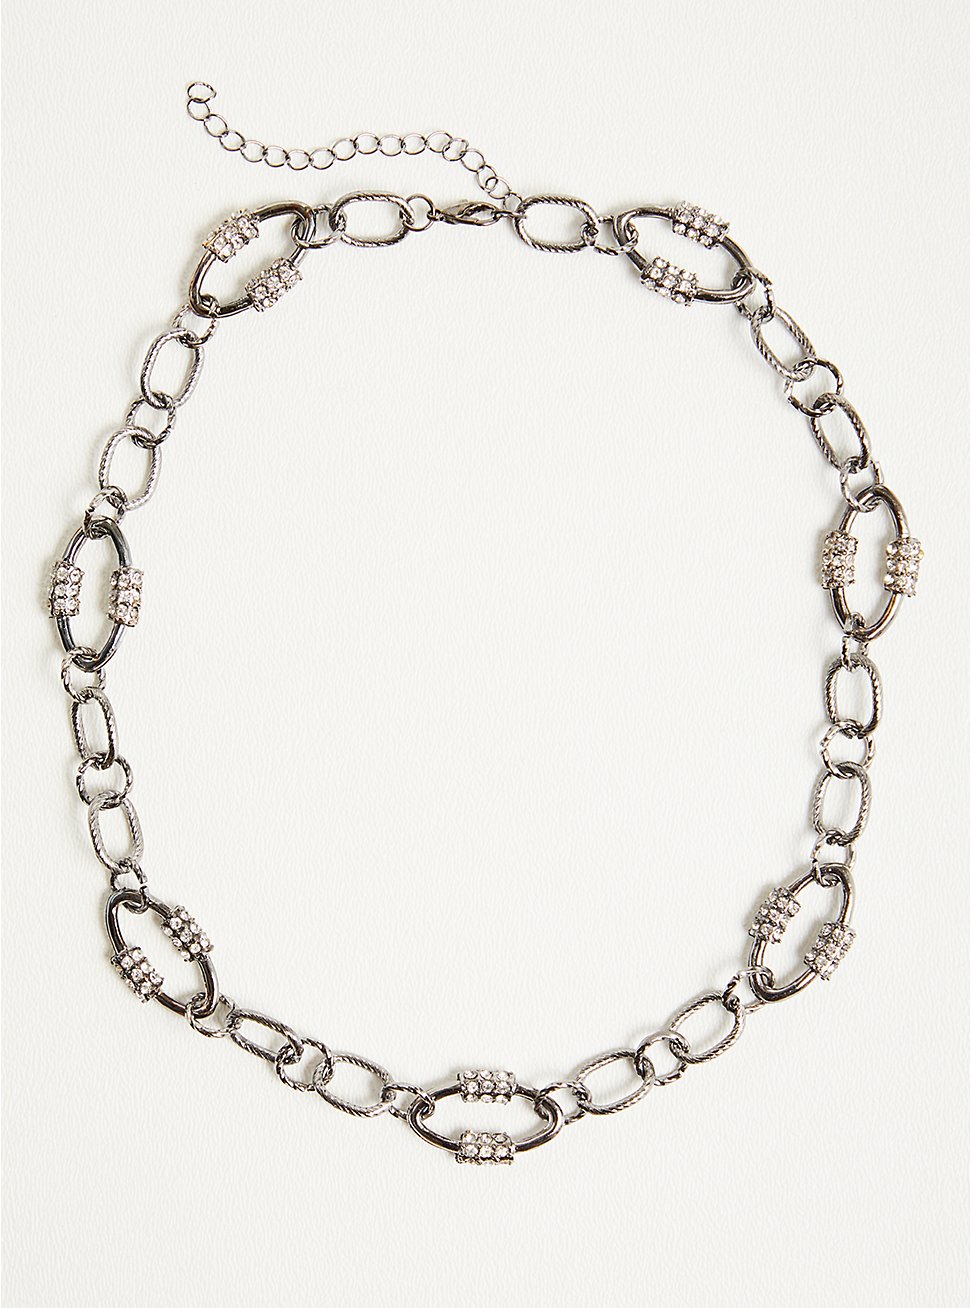 Plus Size Link Necklace with Pave Detail - Hematite Tone, , hi-res